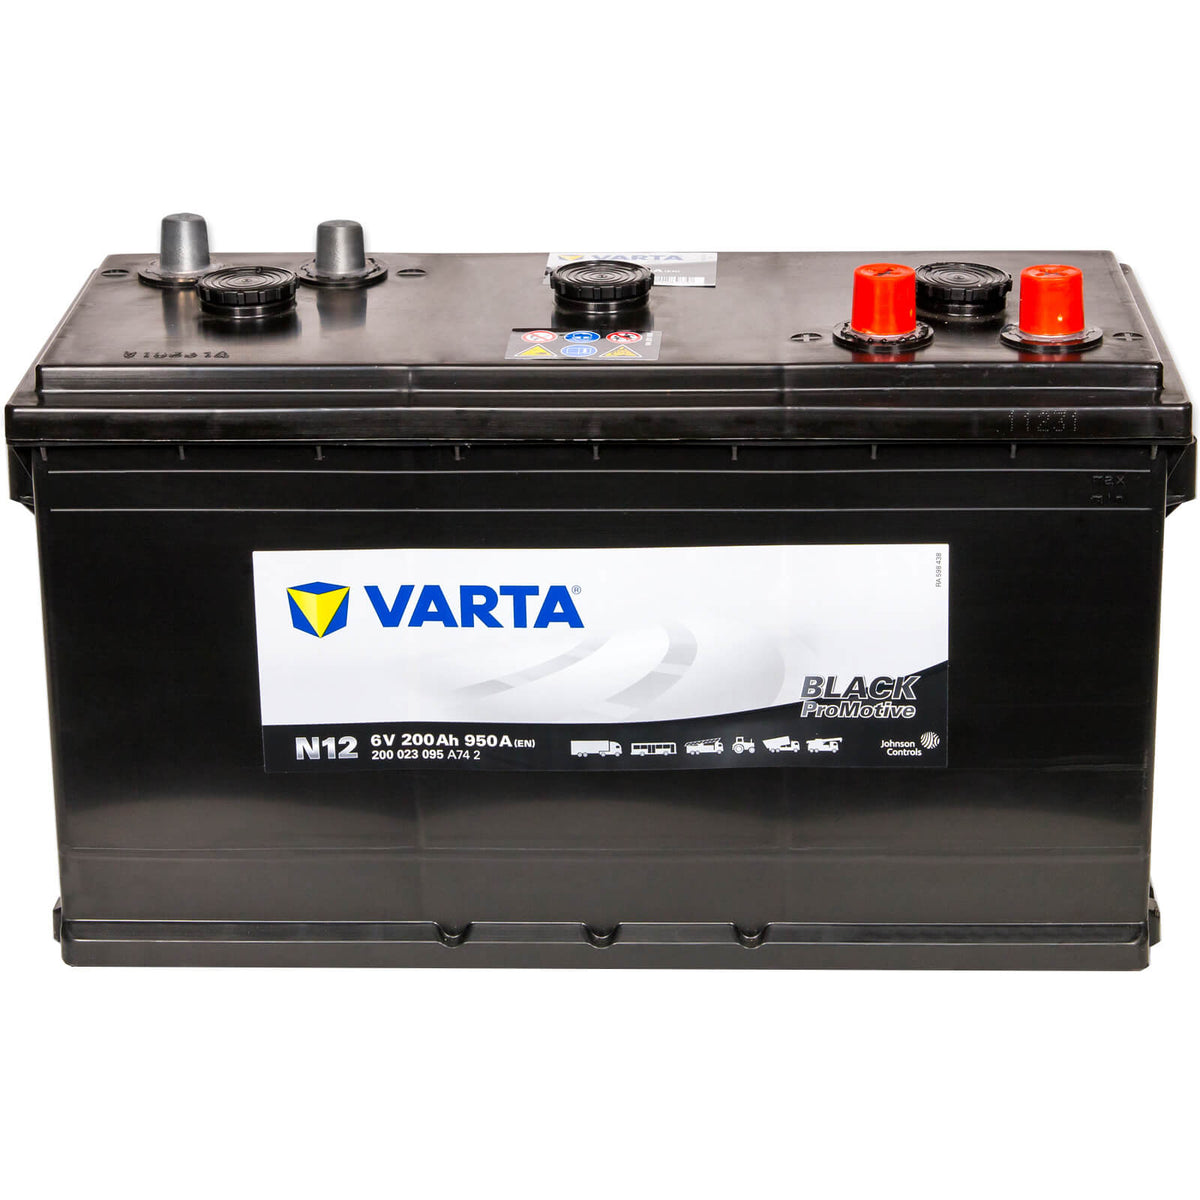 Varta N12 Promotive Black 6V 200Ah 950A/EN